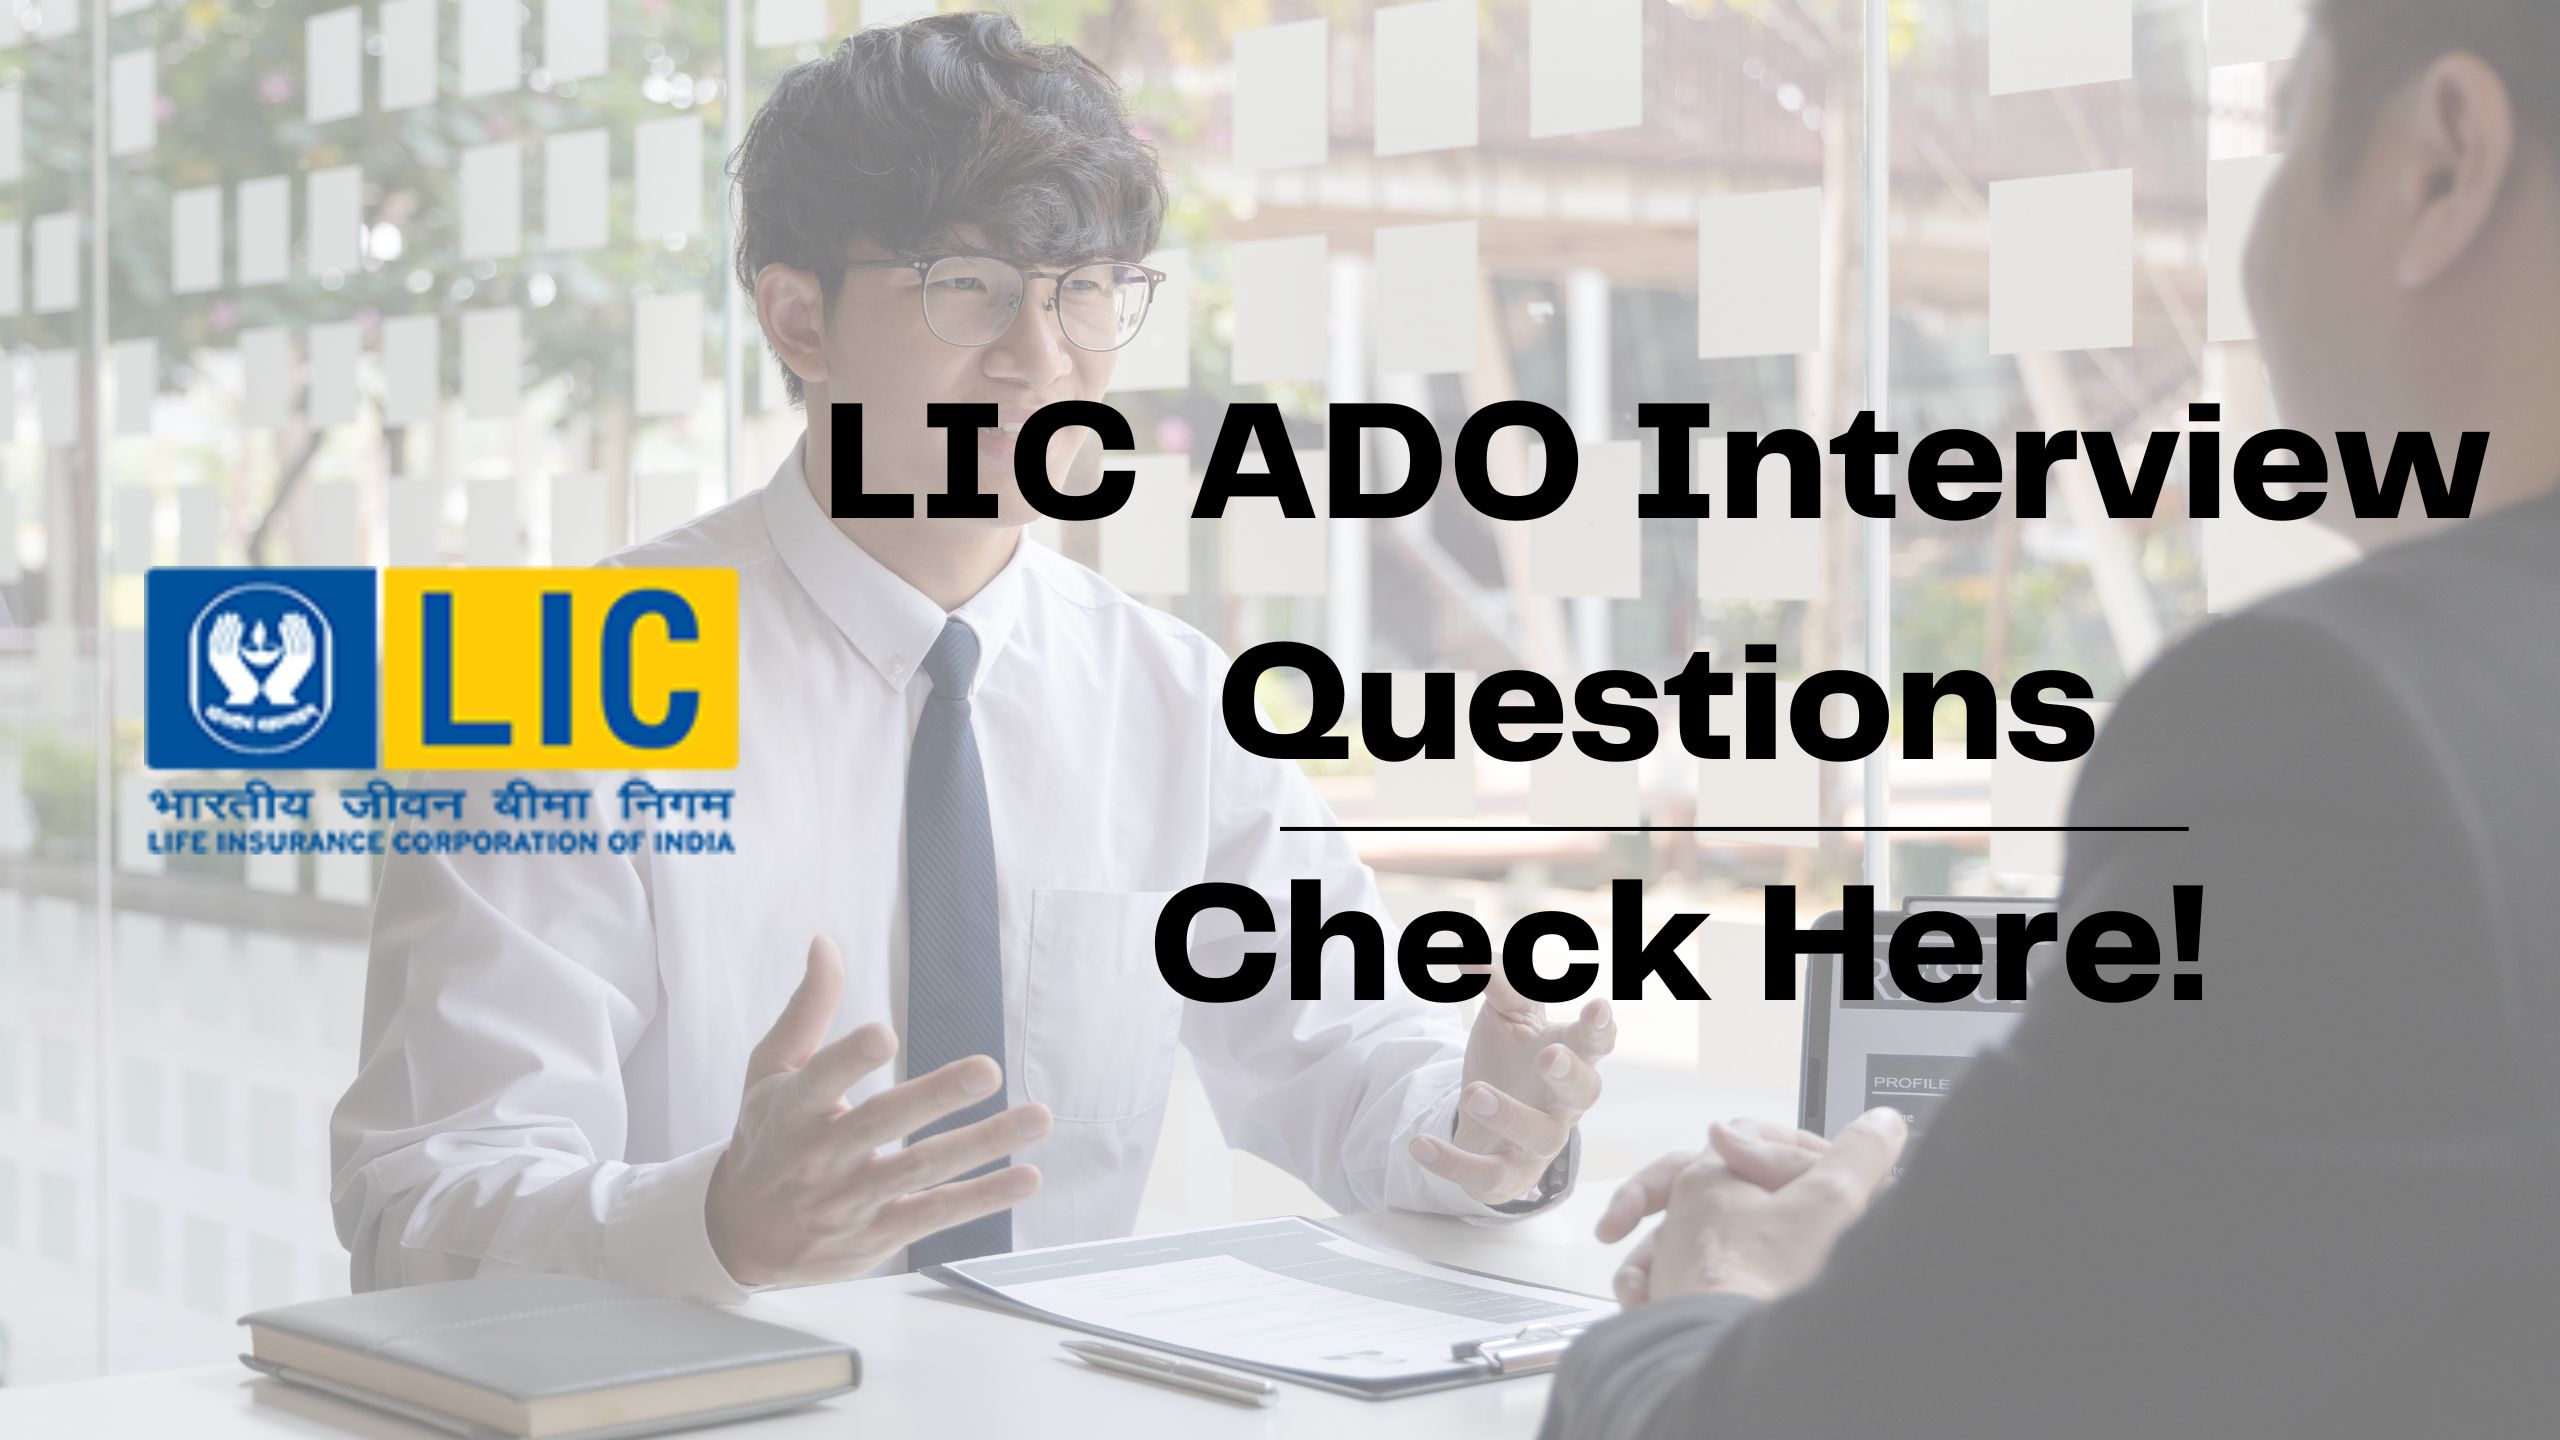 LIC ADO Interview Questions